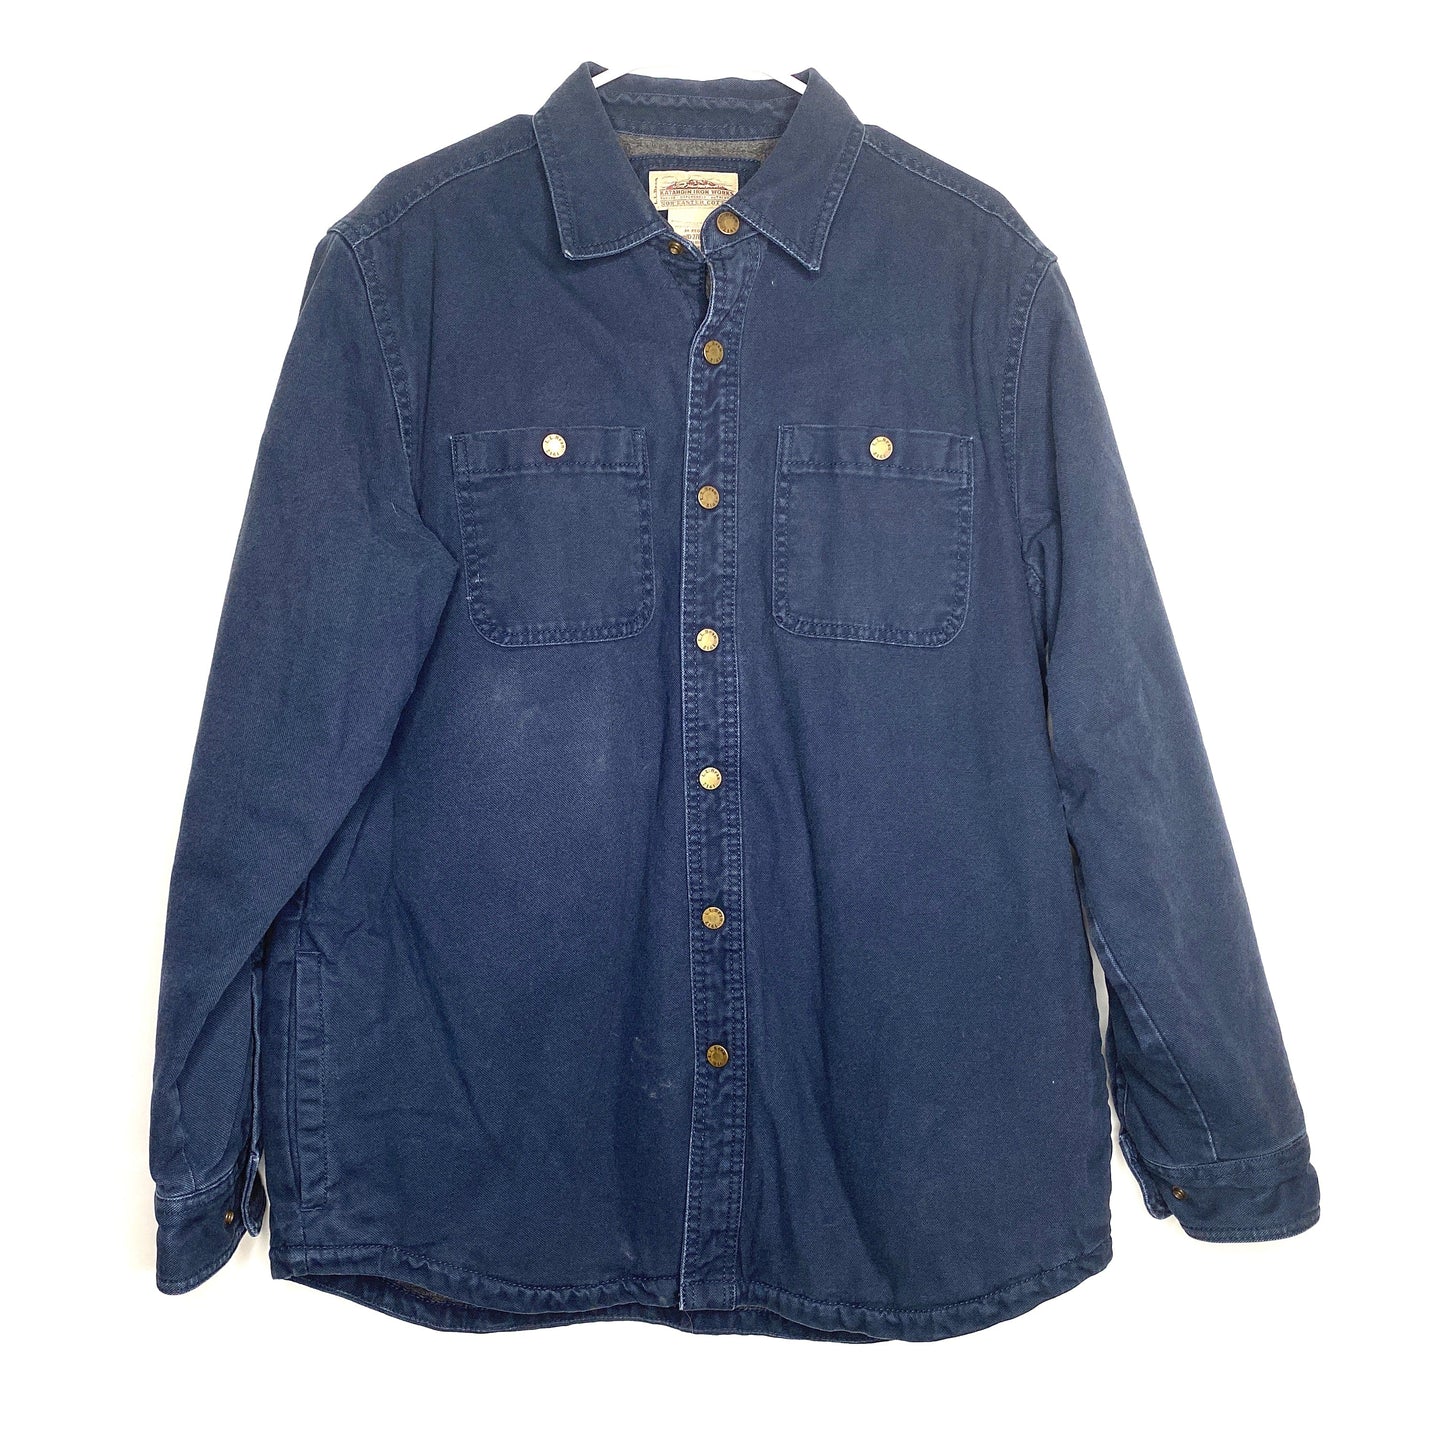 LL Bean Mens Size M Blue Shacket Fleece Lined Jacket Shirt